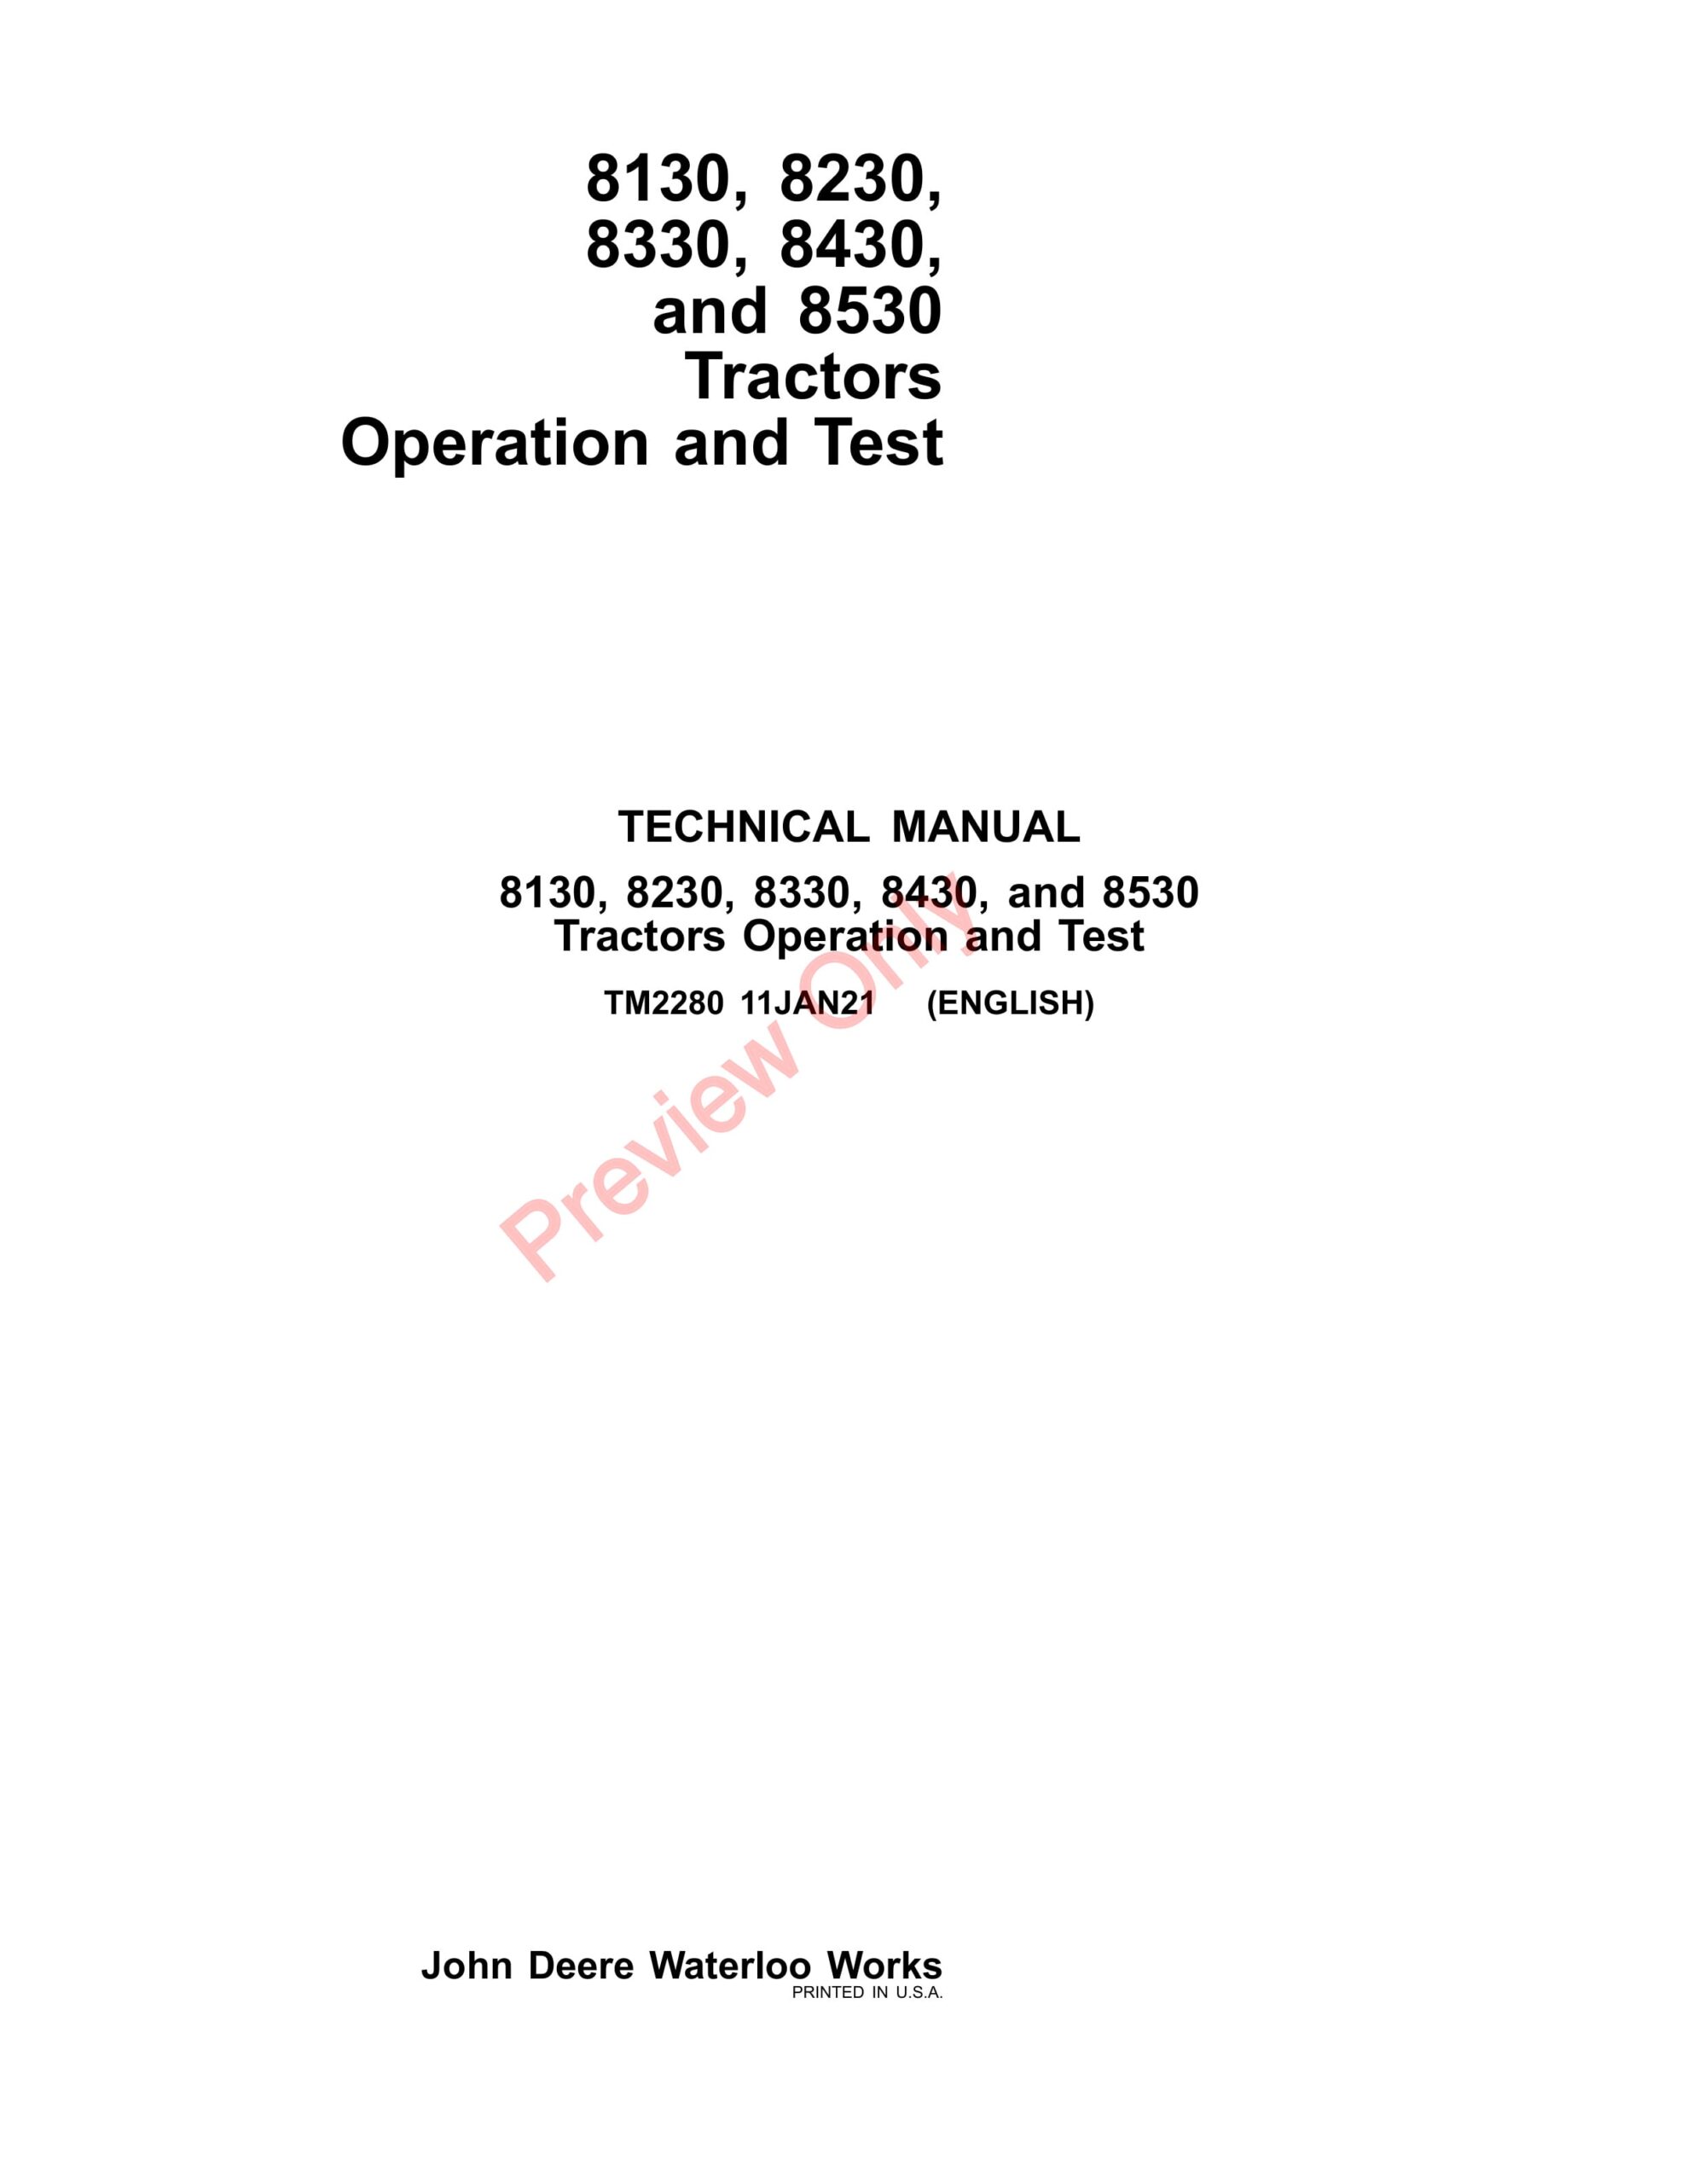 John Deere 8130, 8230, 8330, 8430 and 8530 Tractors Technical Manual TM2280 11JAN21-1